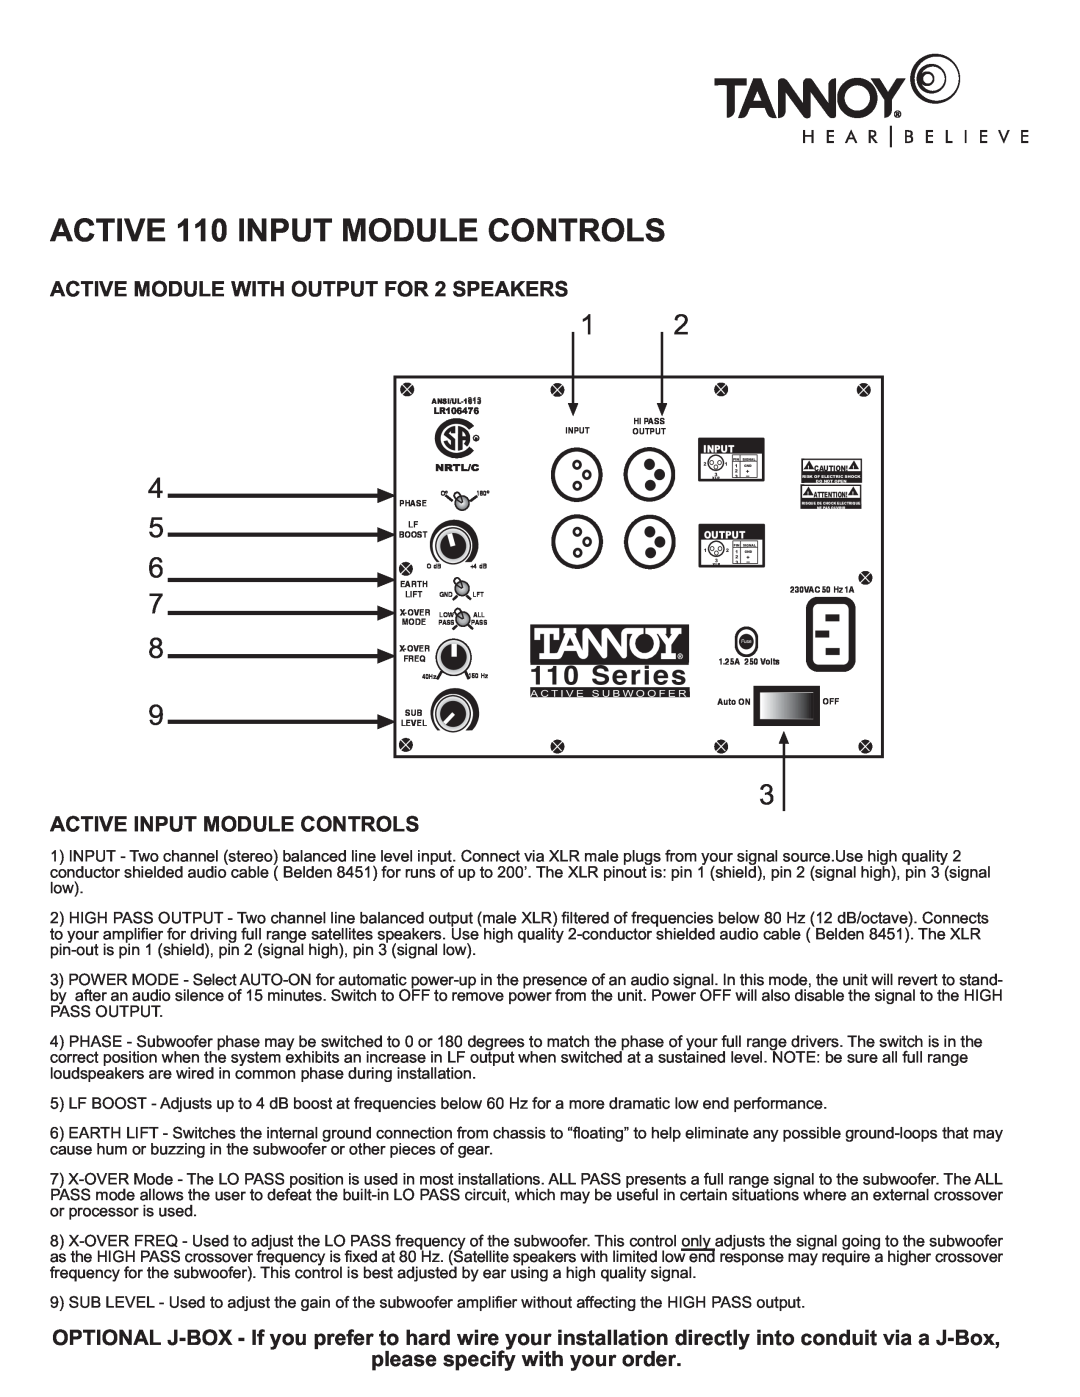 TOA Electronics 110SR owner manual ACTIVE 110 INPUT MODULE CONTROLS, 5 6 7, Series 